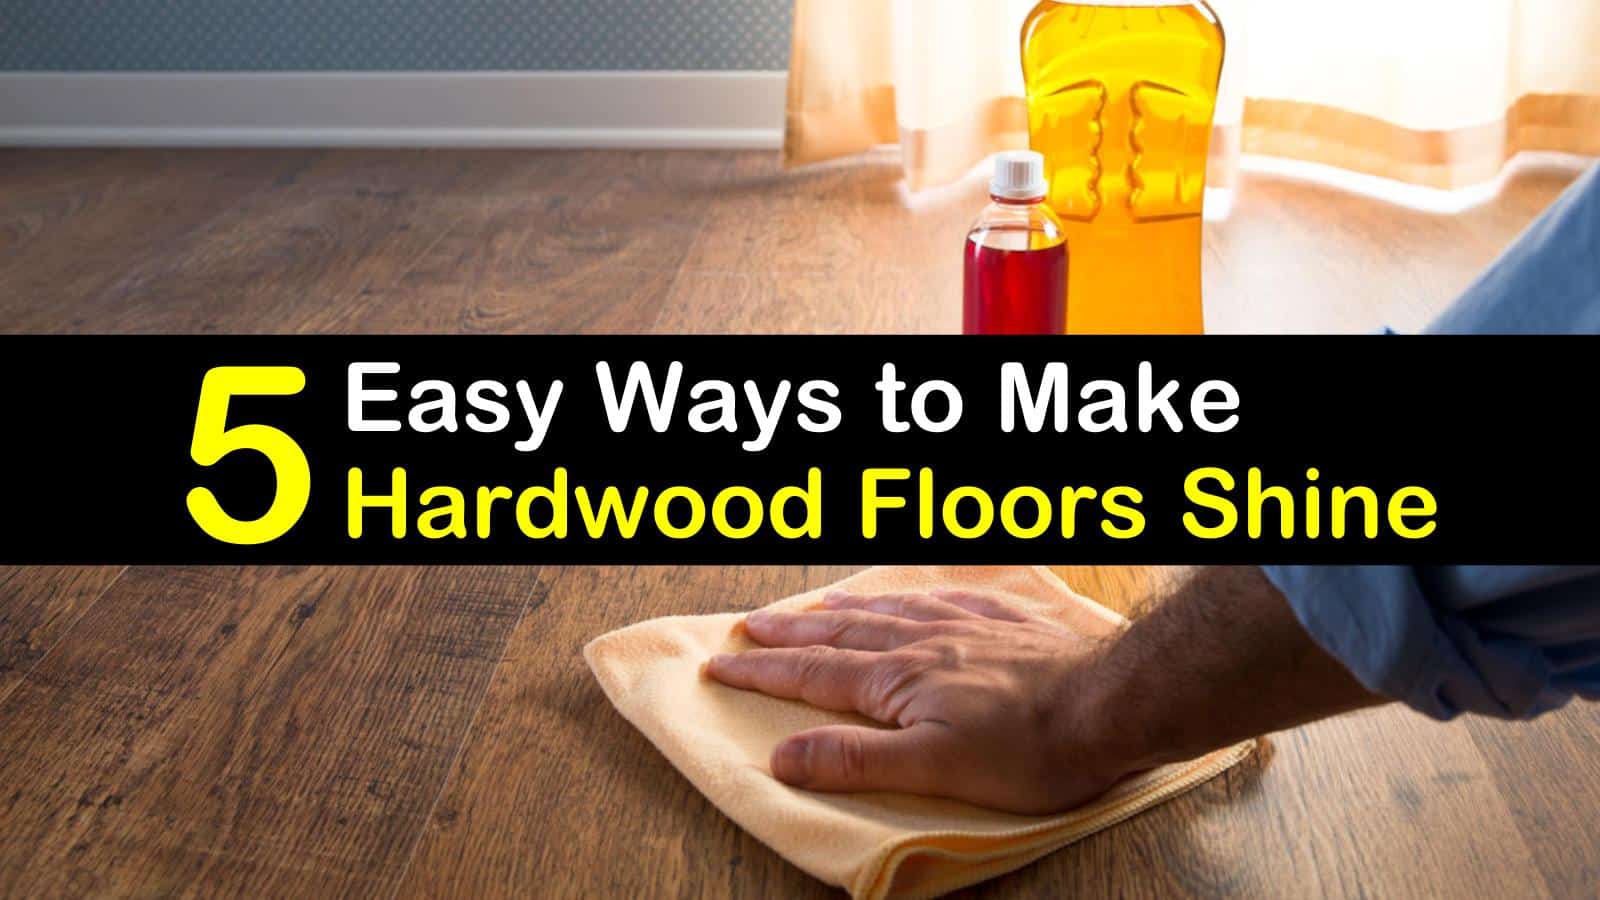 5 Easy Ways To Make Hardwood Floors Shine, Clean And Shine Hardwood Floors